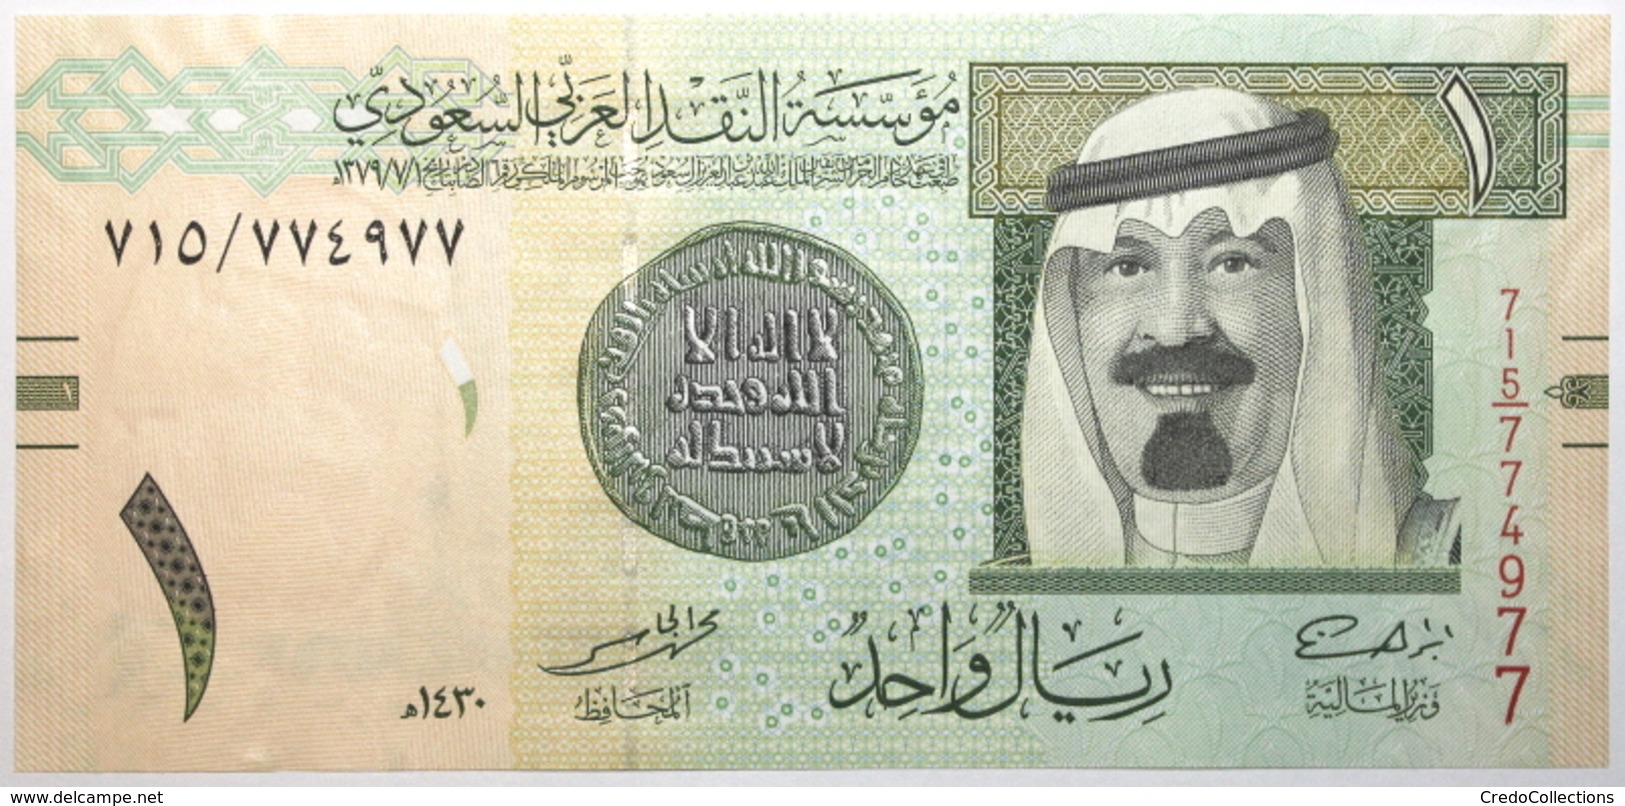 Arabie Saoudite - 1 Riyal - 2009 - PICK 31b - NEUF - Saudi Arabia